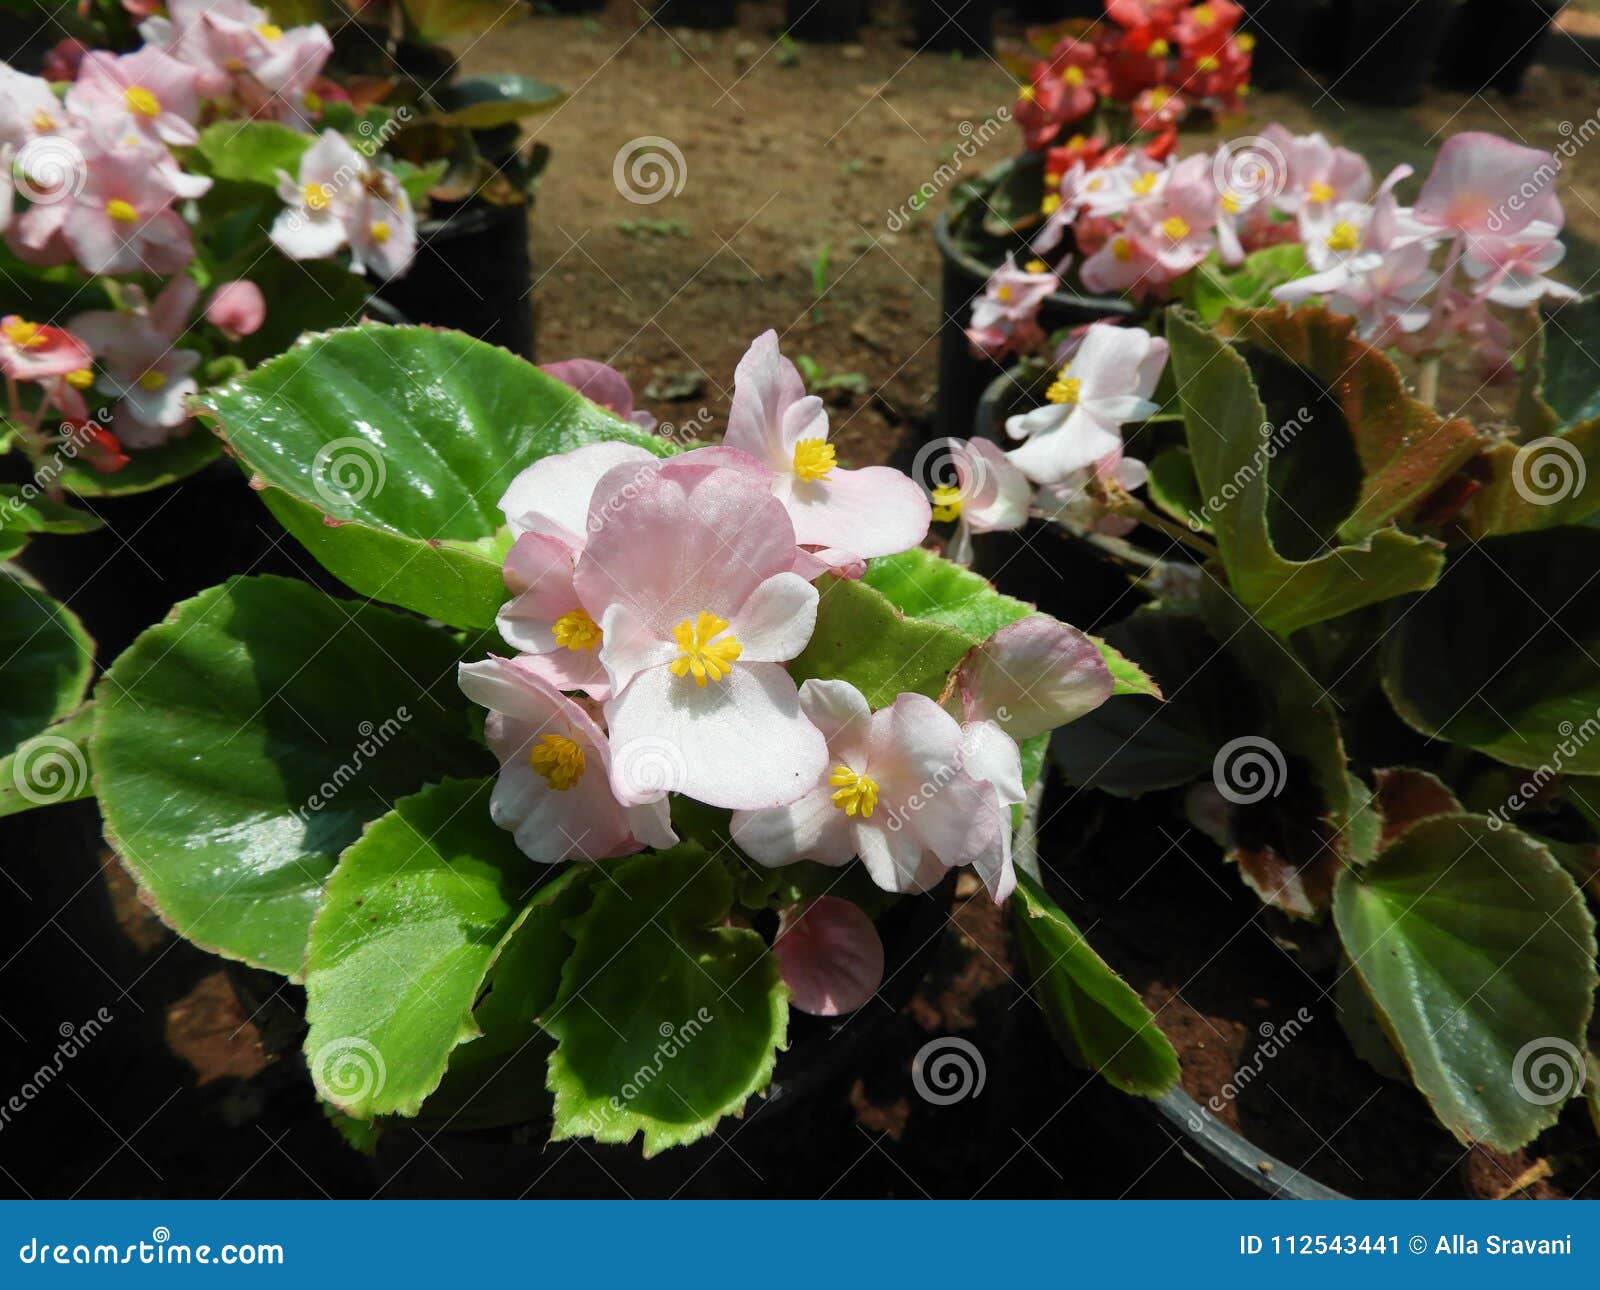 Begonia semperflorens stock image. Image of bloom, closeup - 112543441